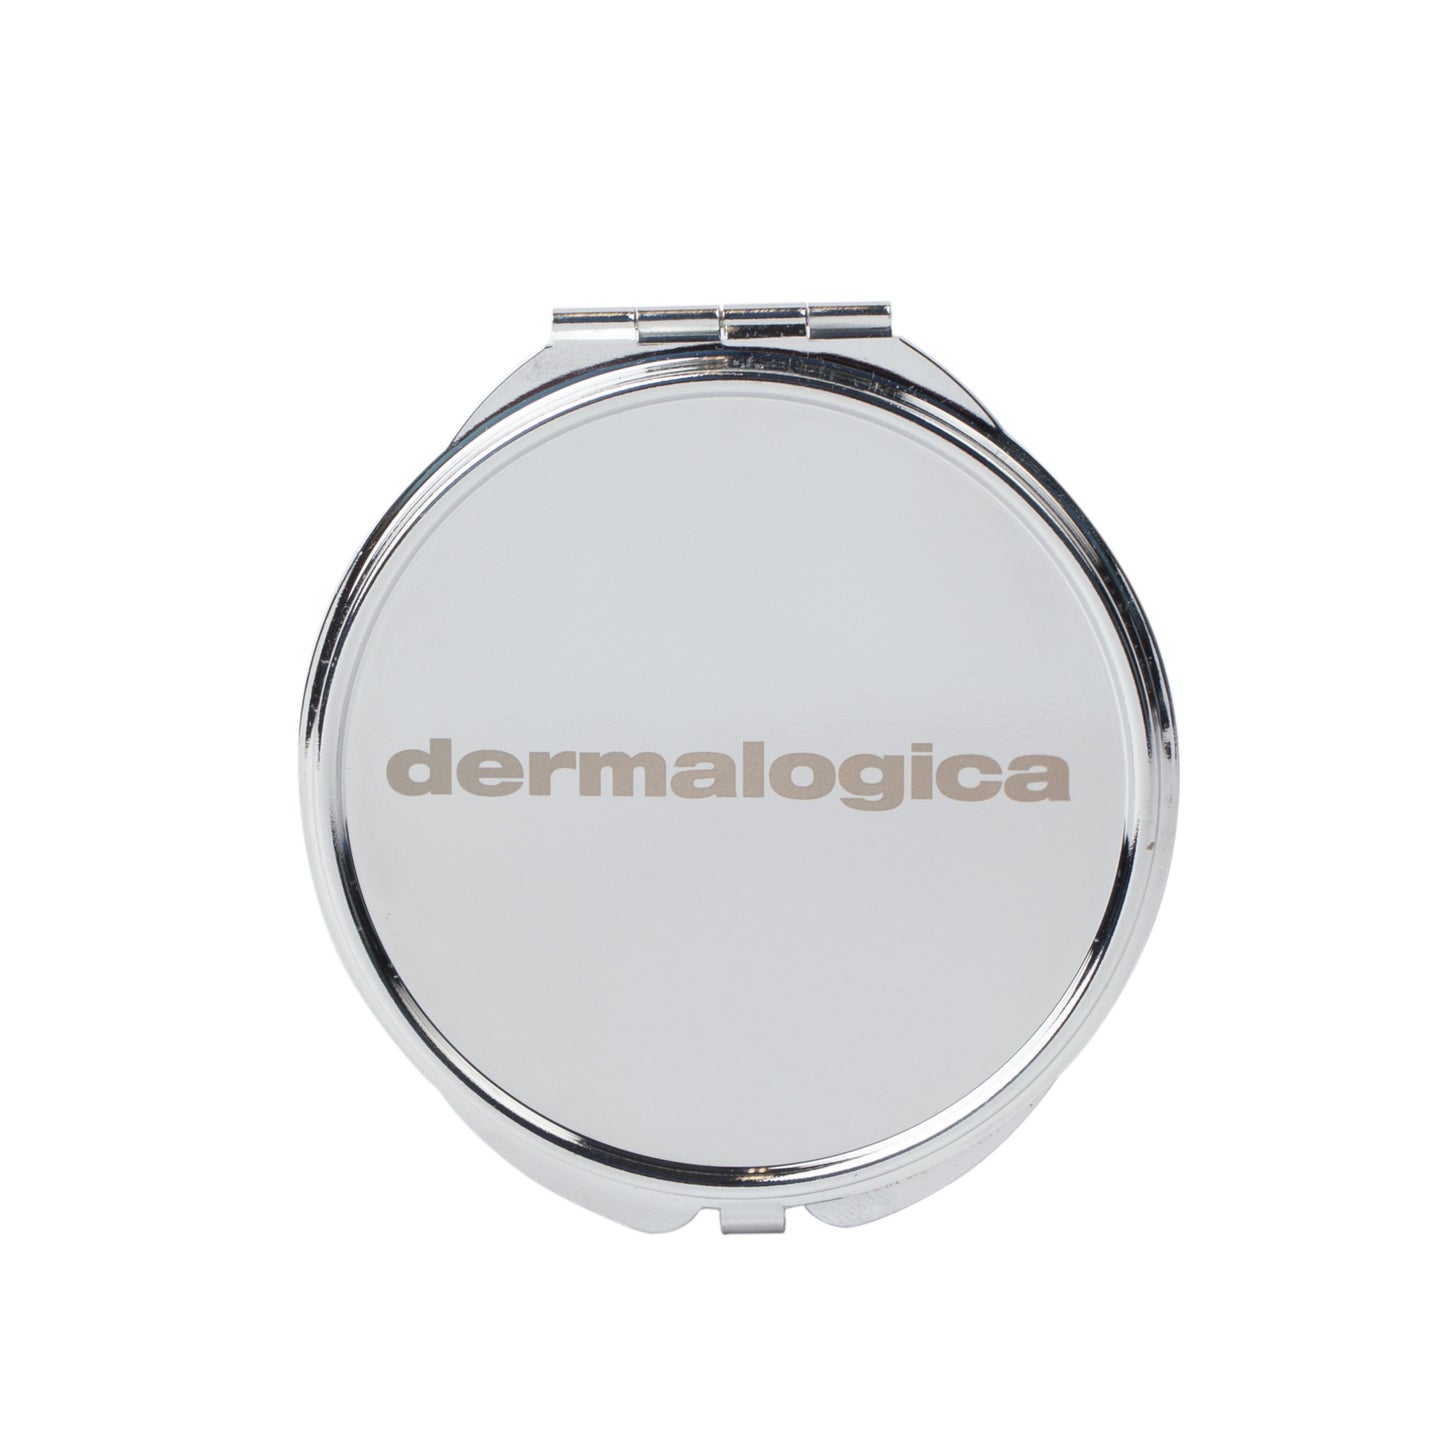 dermalogica compact mirror